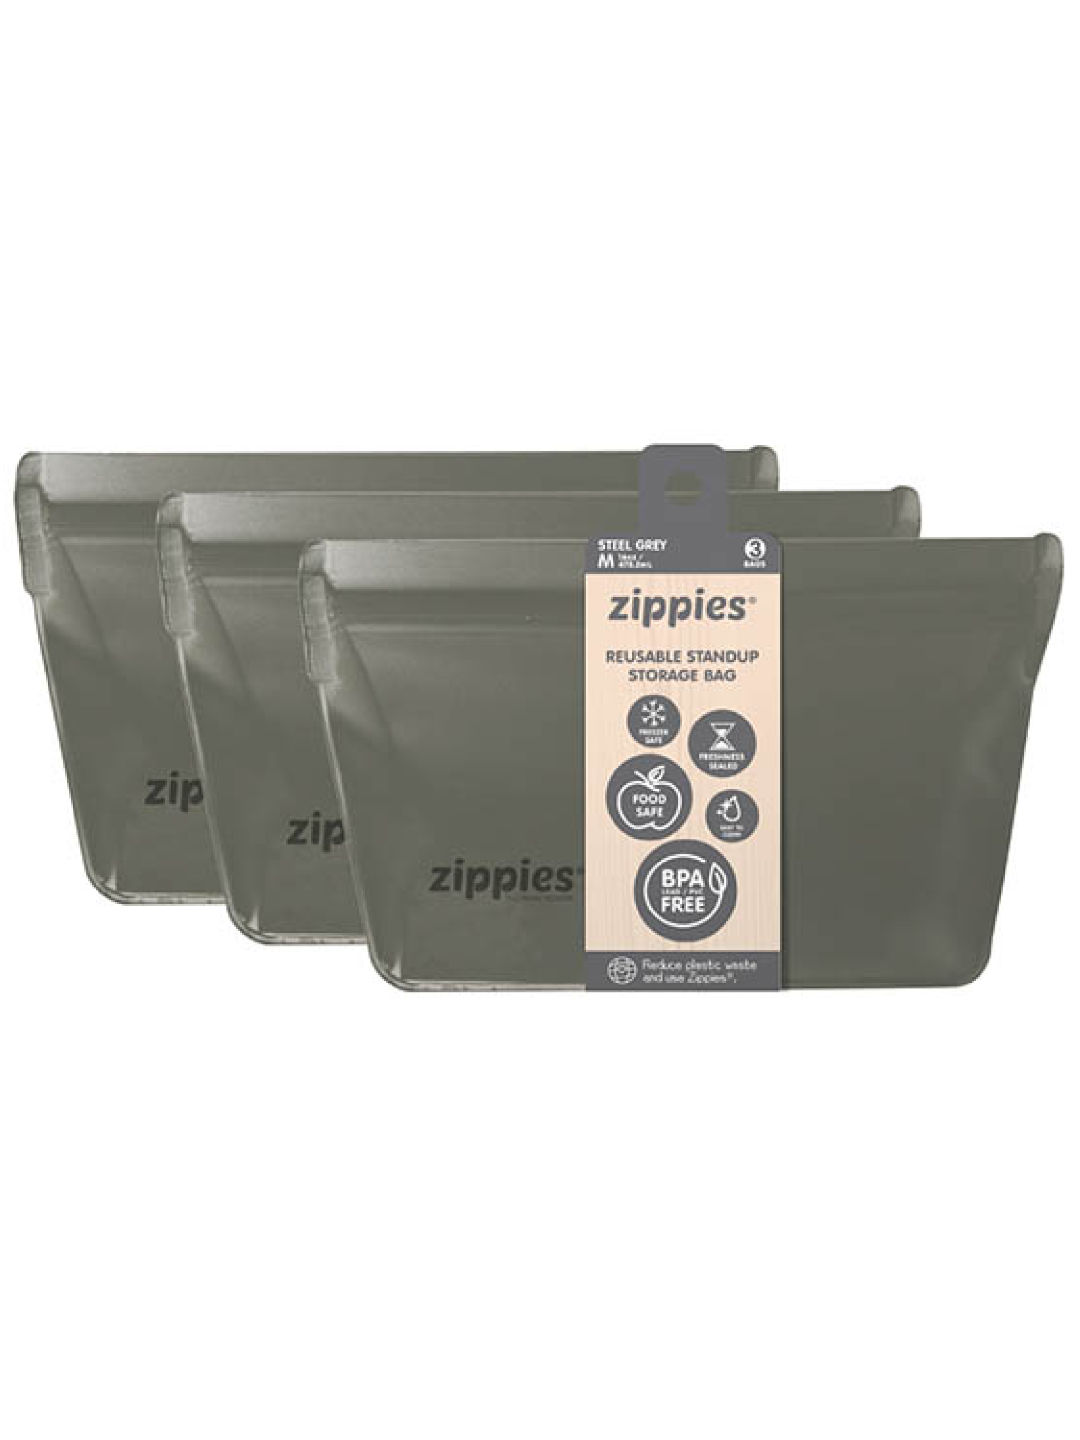 Zippies Reusable Standup Storage Bags Medium (Bundle of 3)- Steel Grey series